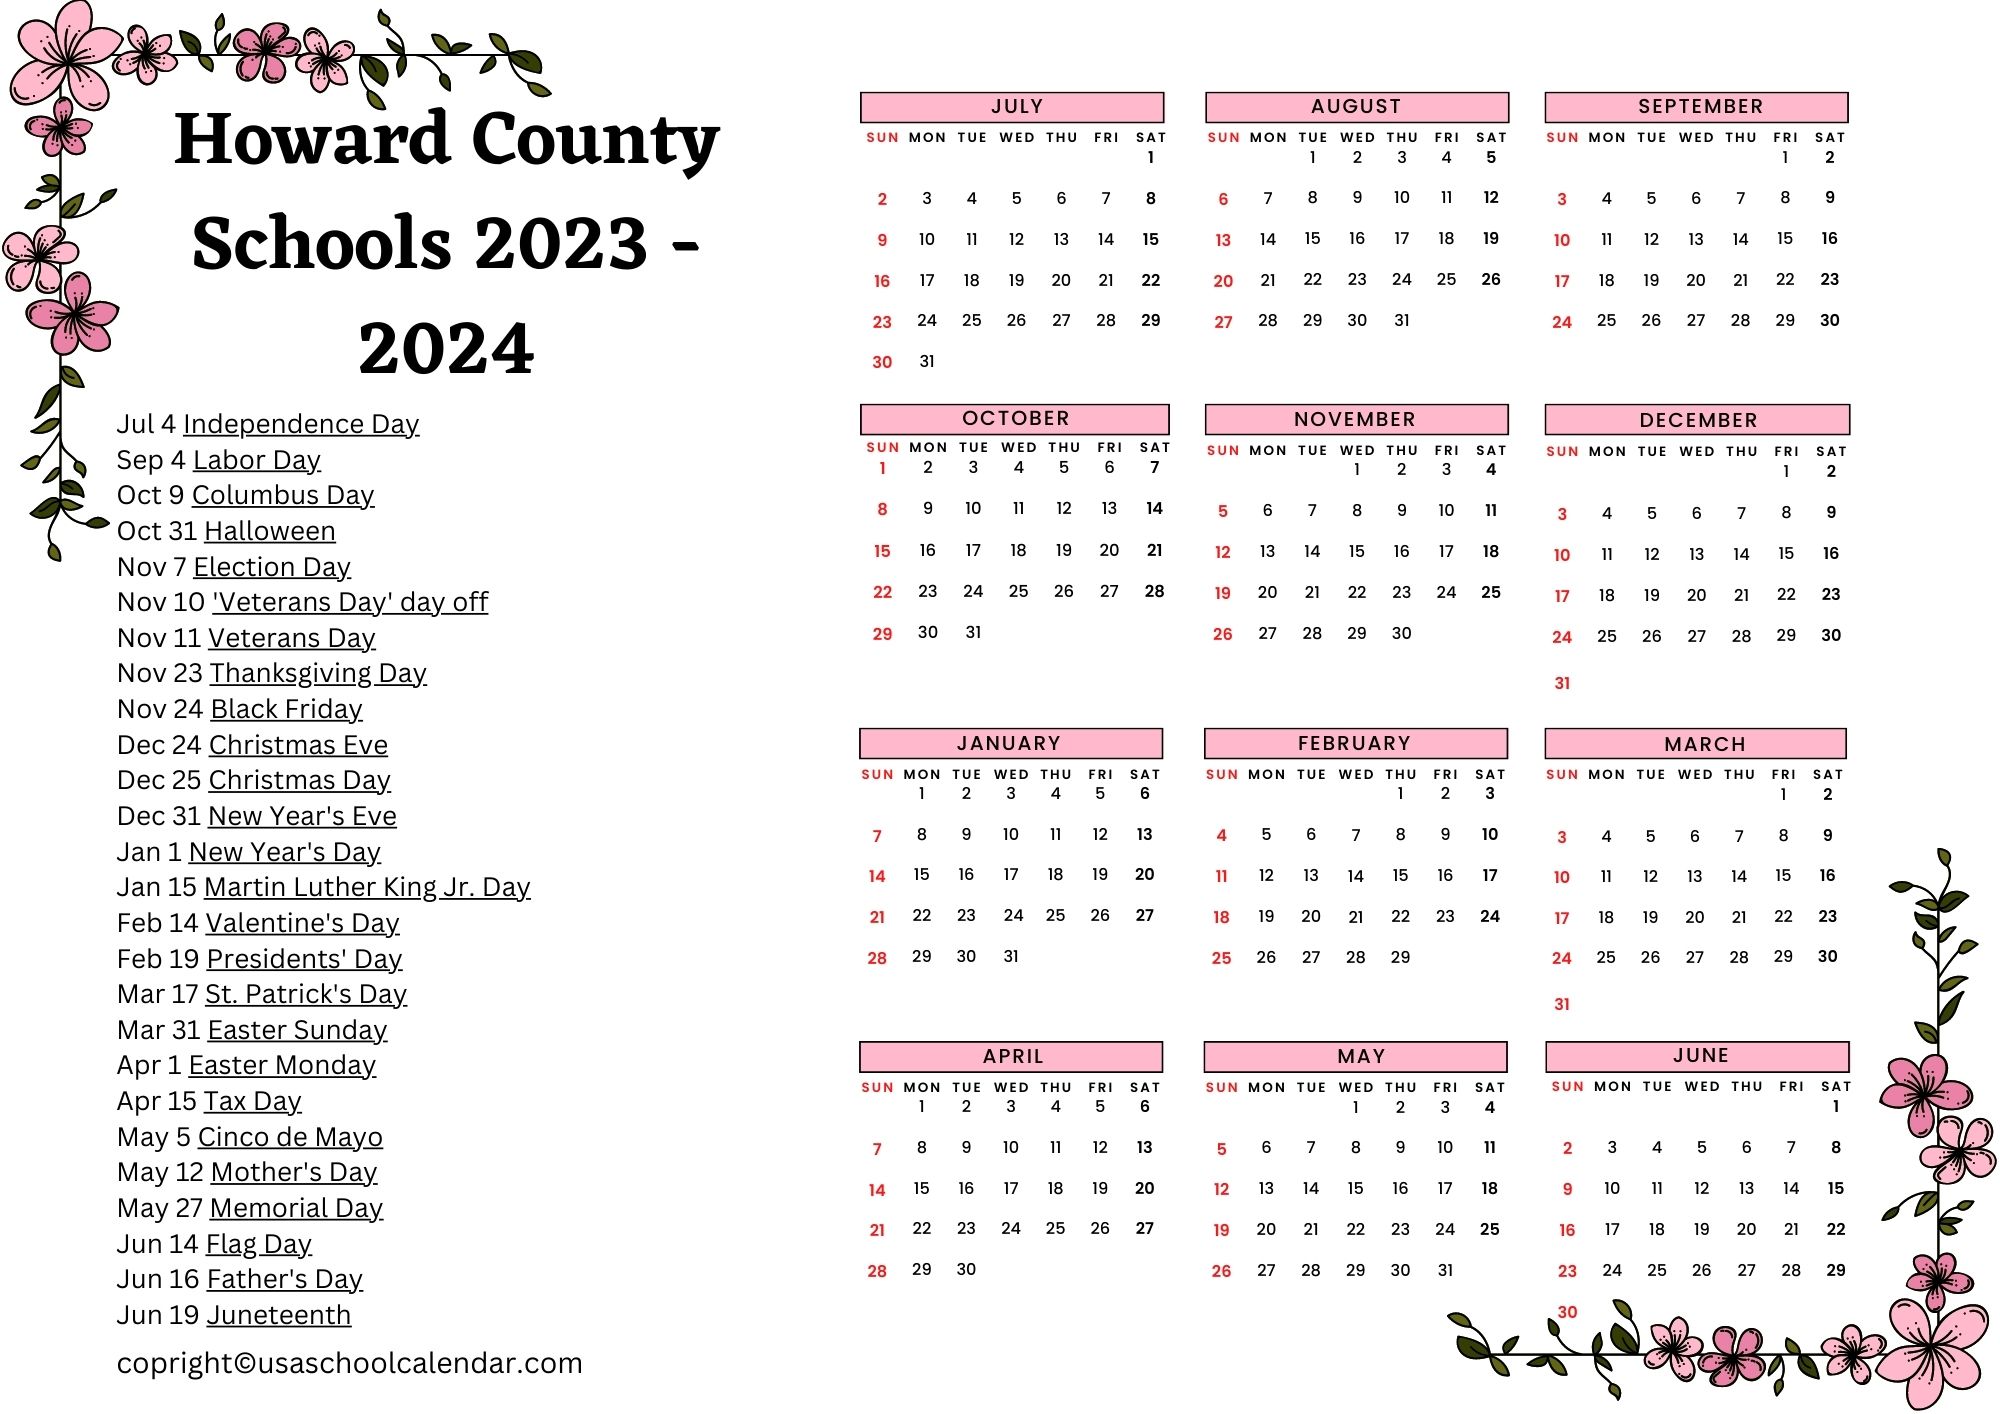 howard-county-schools-calendar-holidays-2023-2024